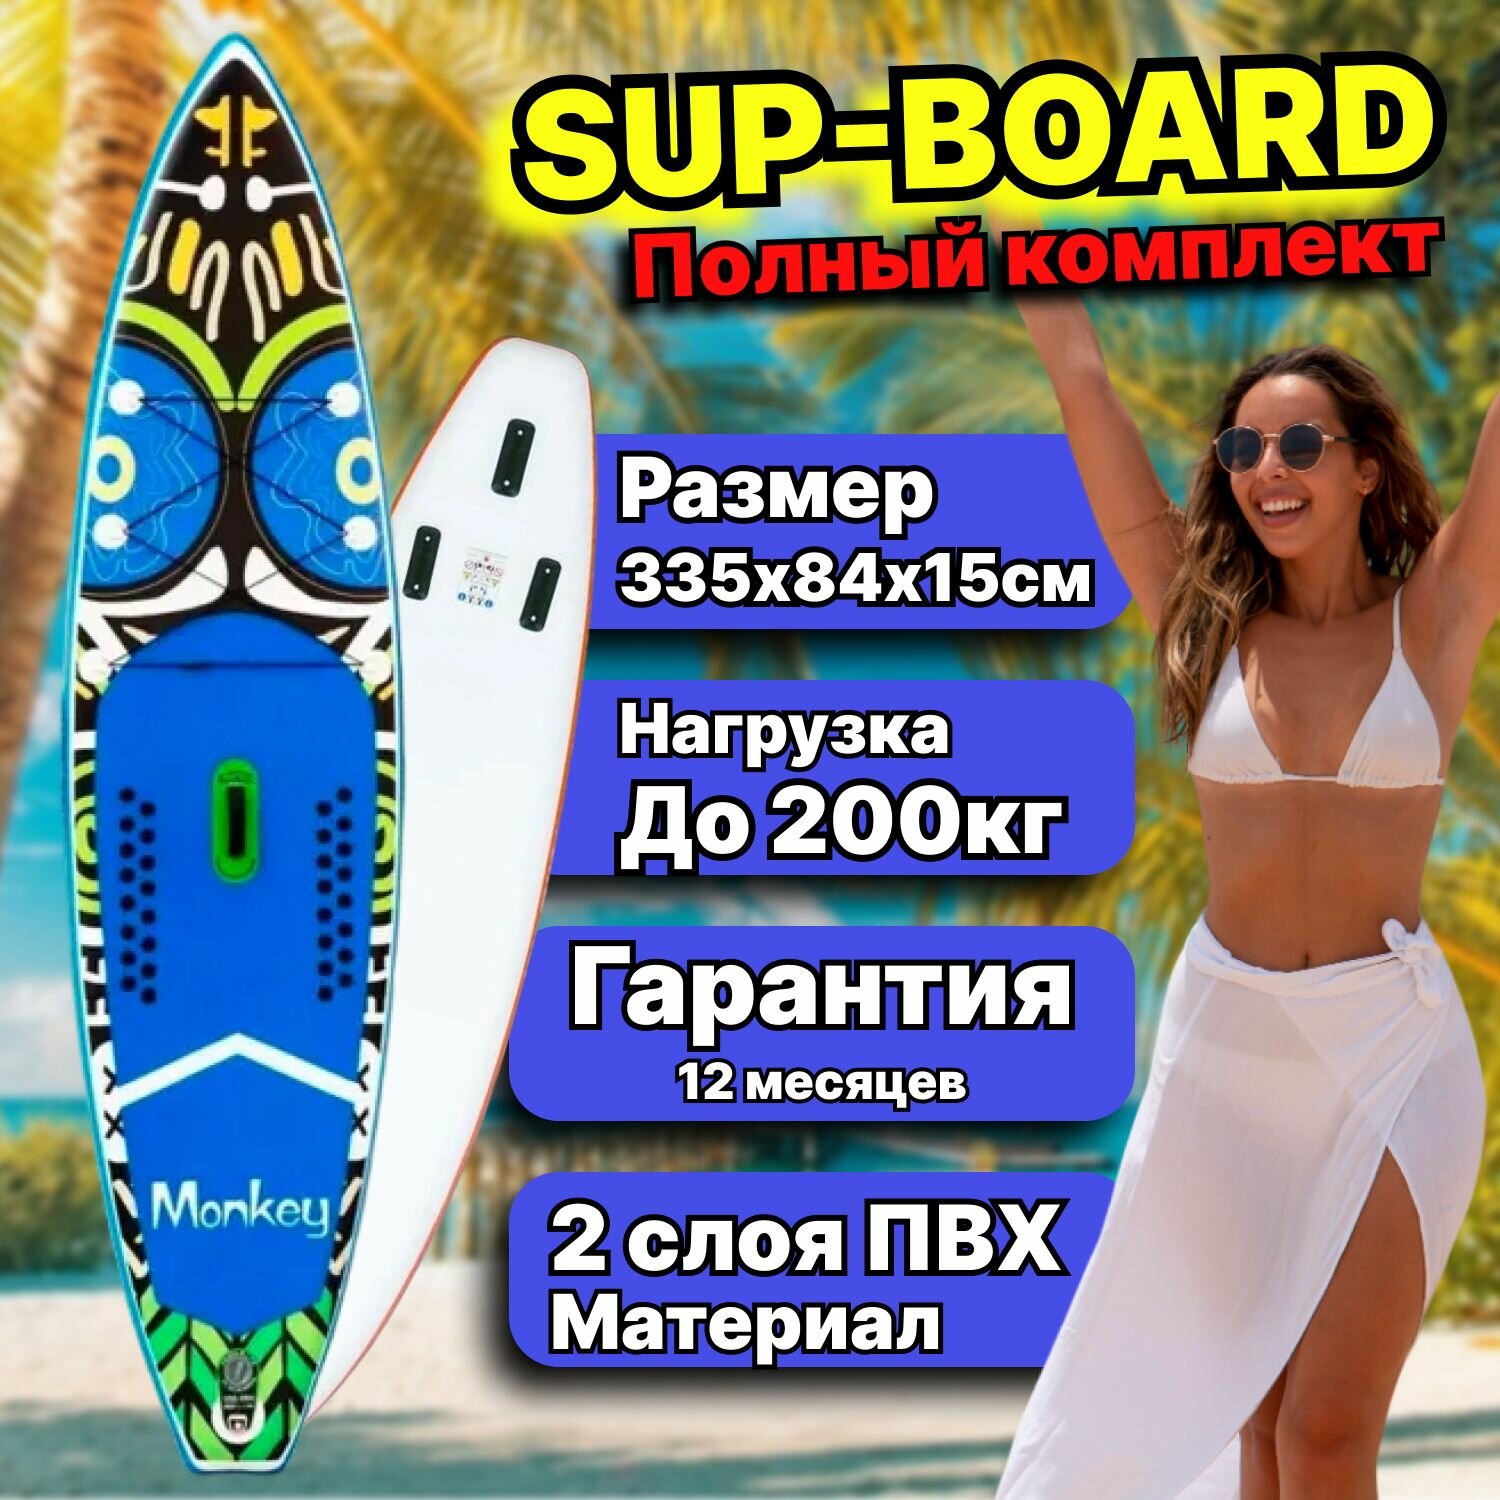 SUP board / сап борд / надувная доска funwater KOI 335cm полный комплект